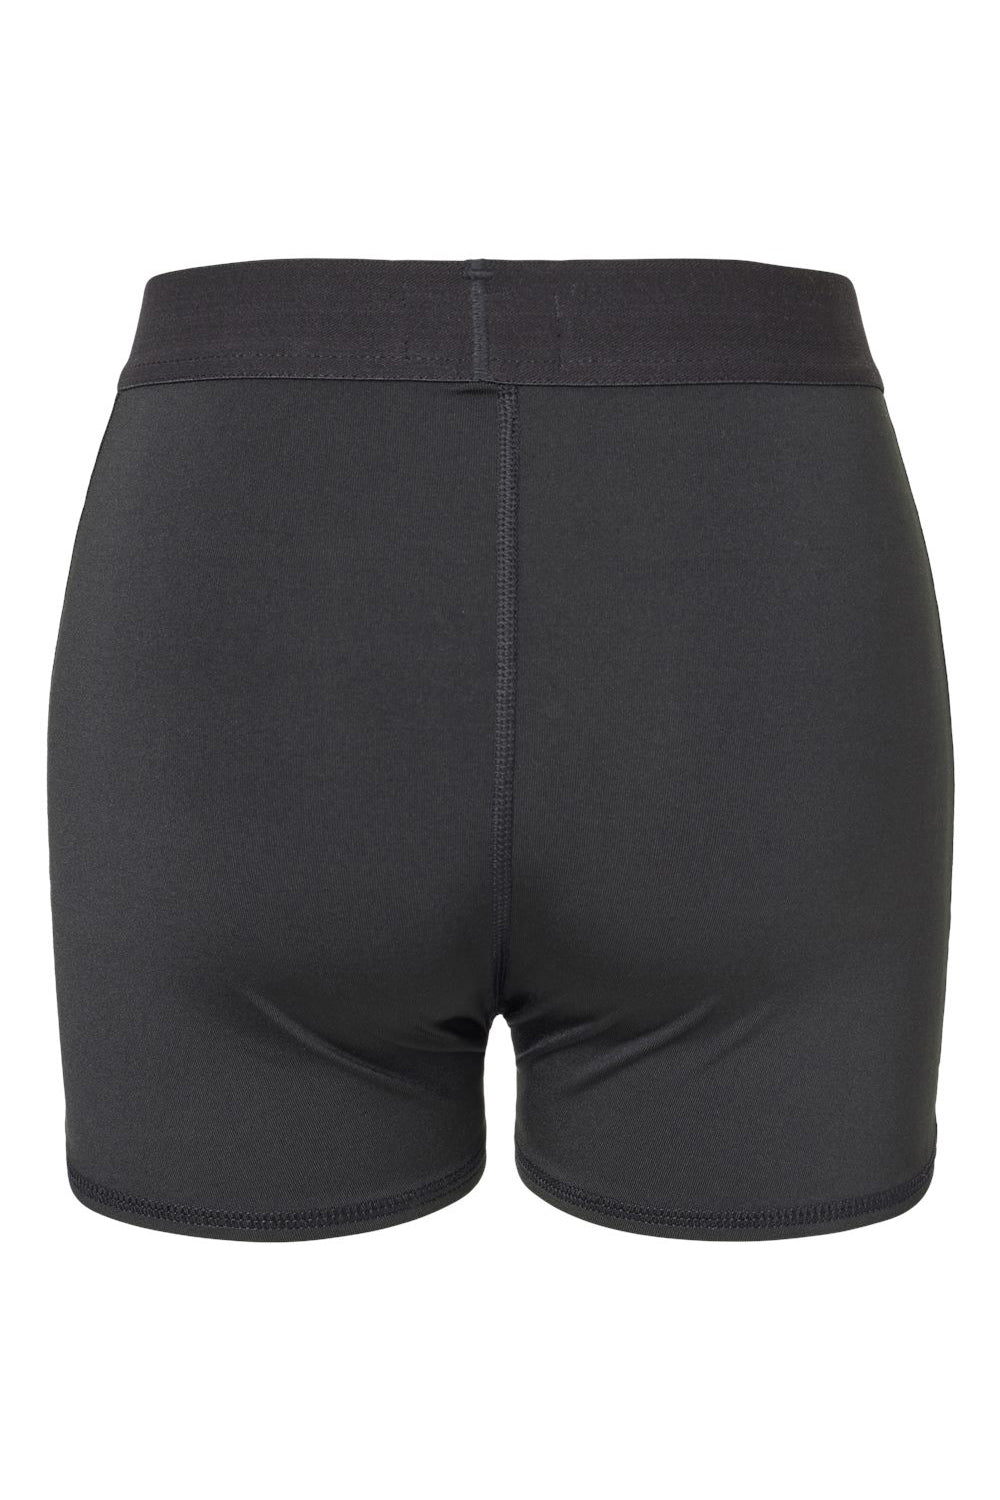 Badger 4629 Womens Moisture Wicking Pro Compression Shorts Black Flat Back